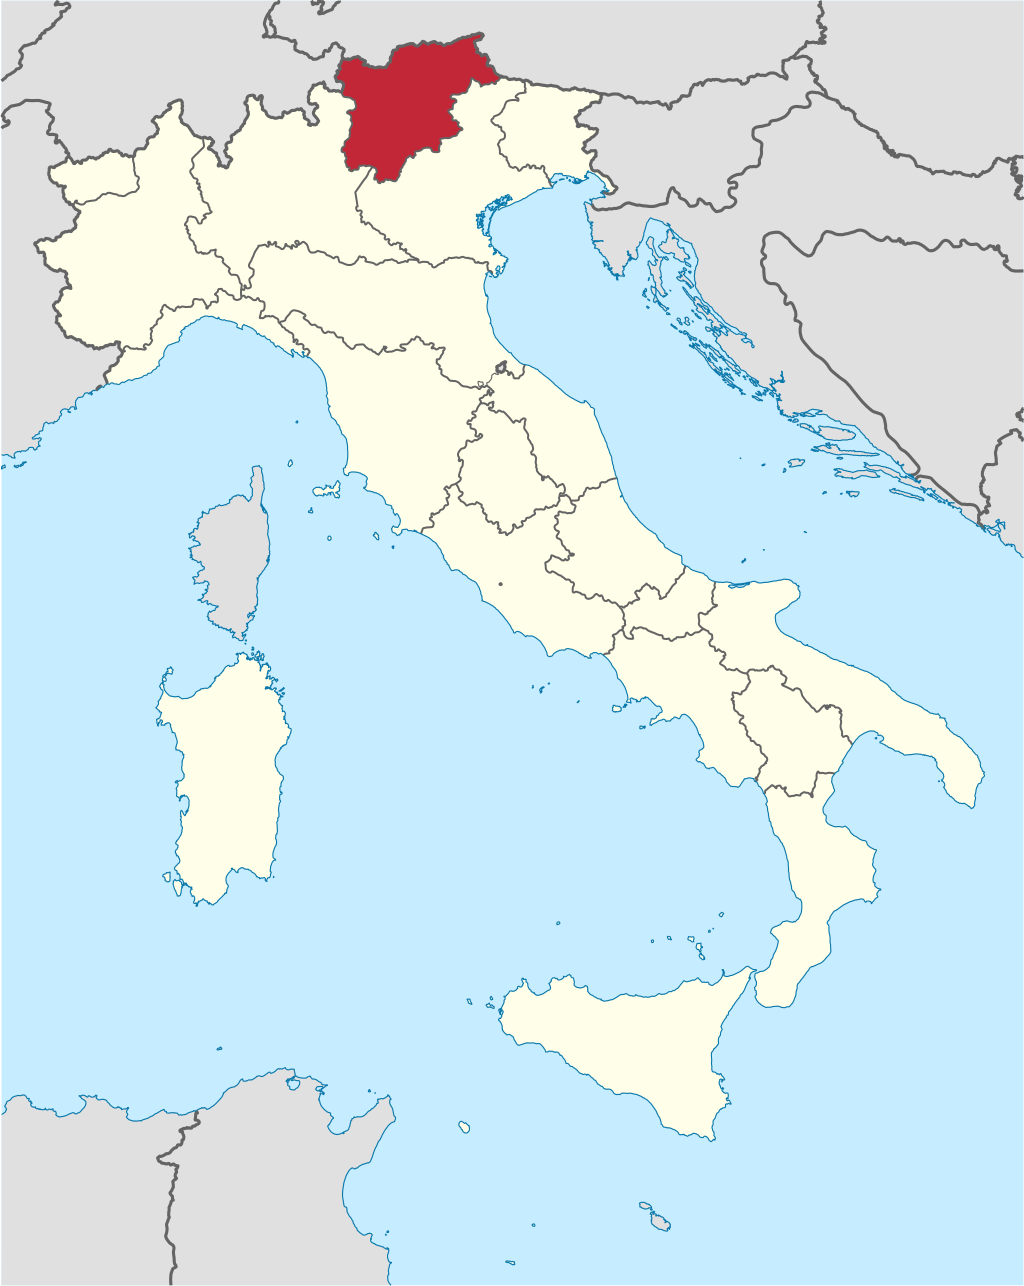 Petrolmarket Urbex location or around the region Trentino Alto Adige (Trentino), Italy